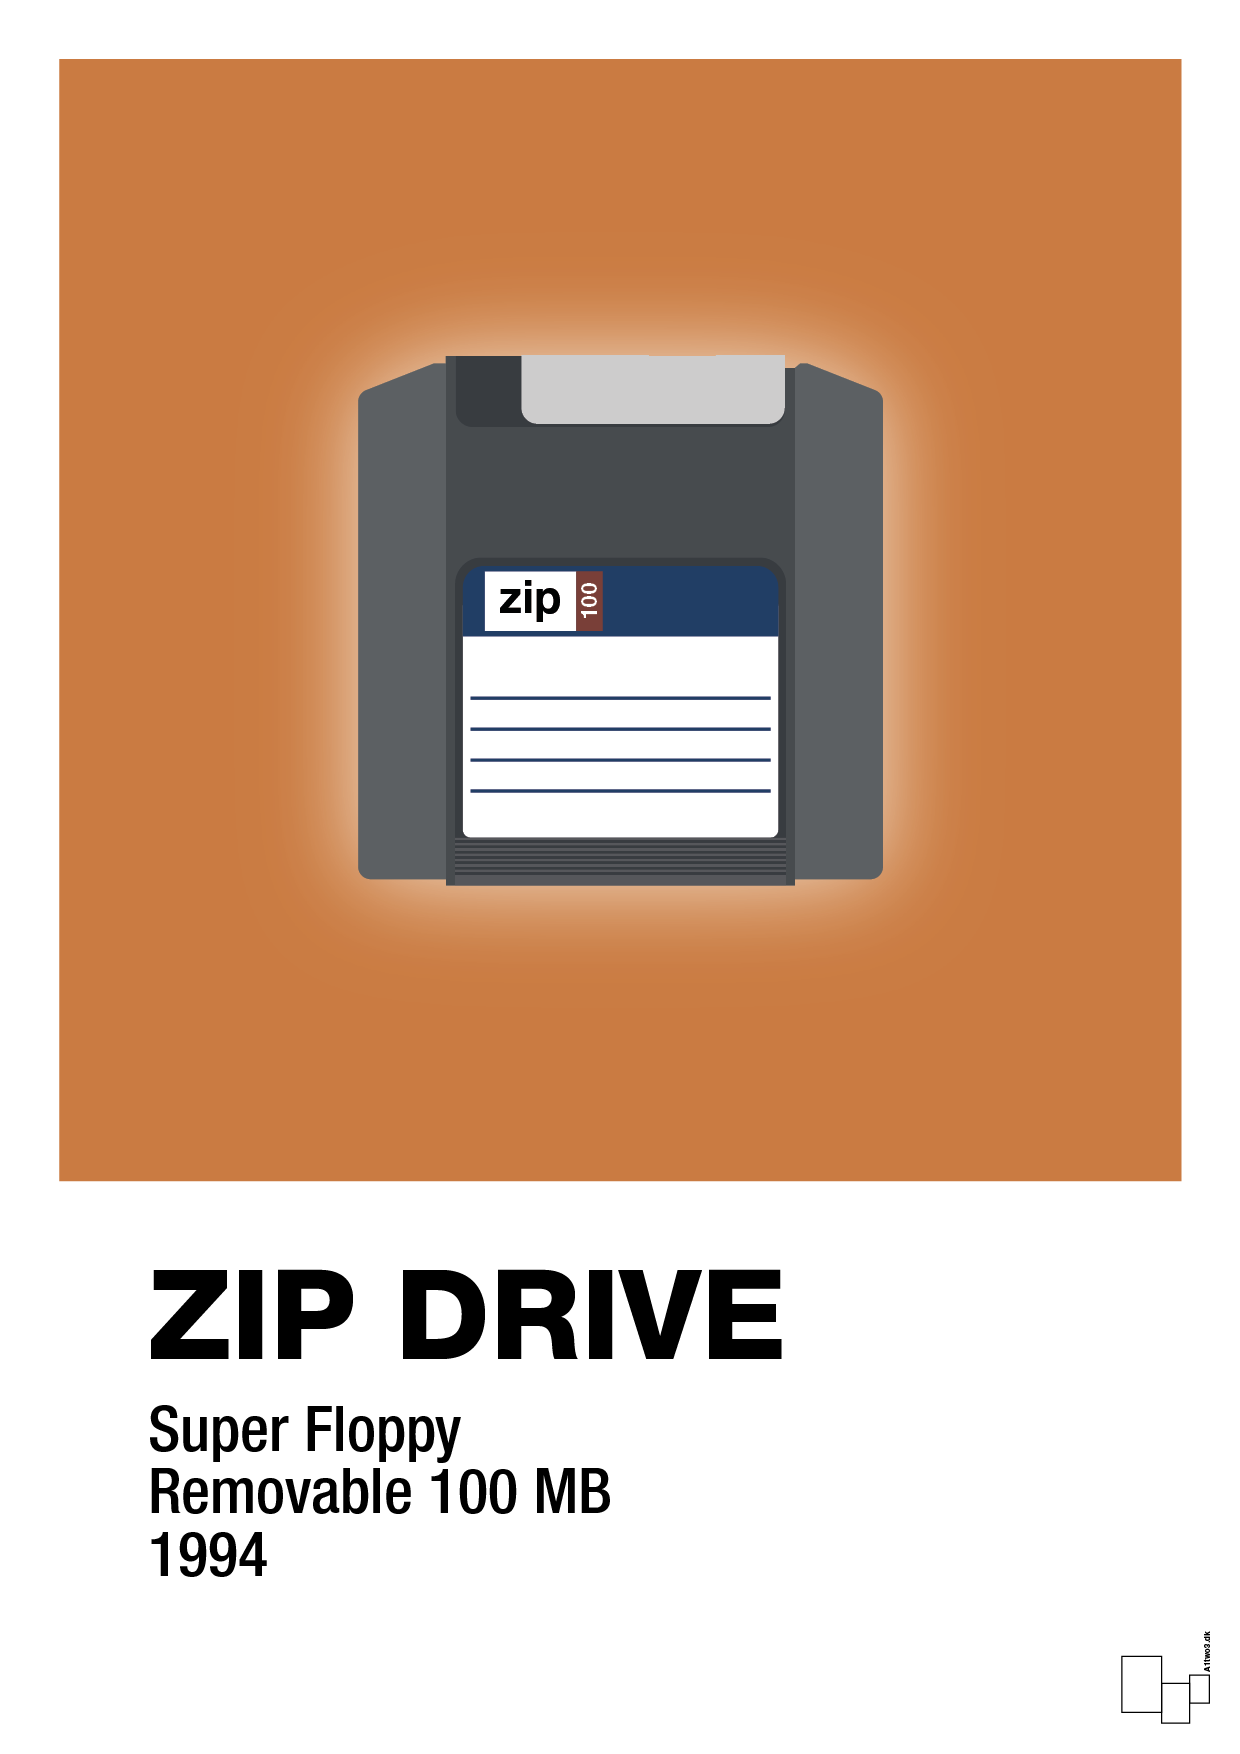 zip drive 100 mb - Plakat med Grafik i Rumba Orange